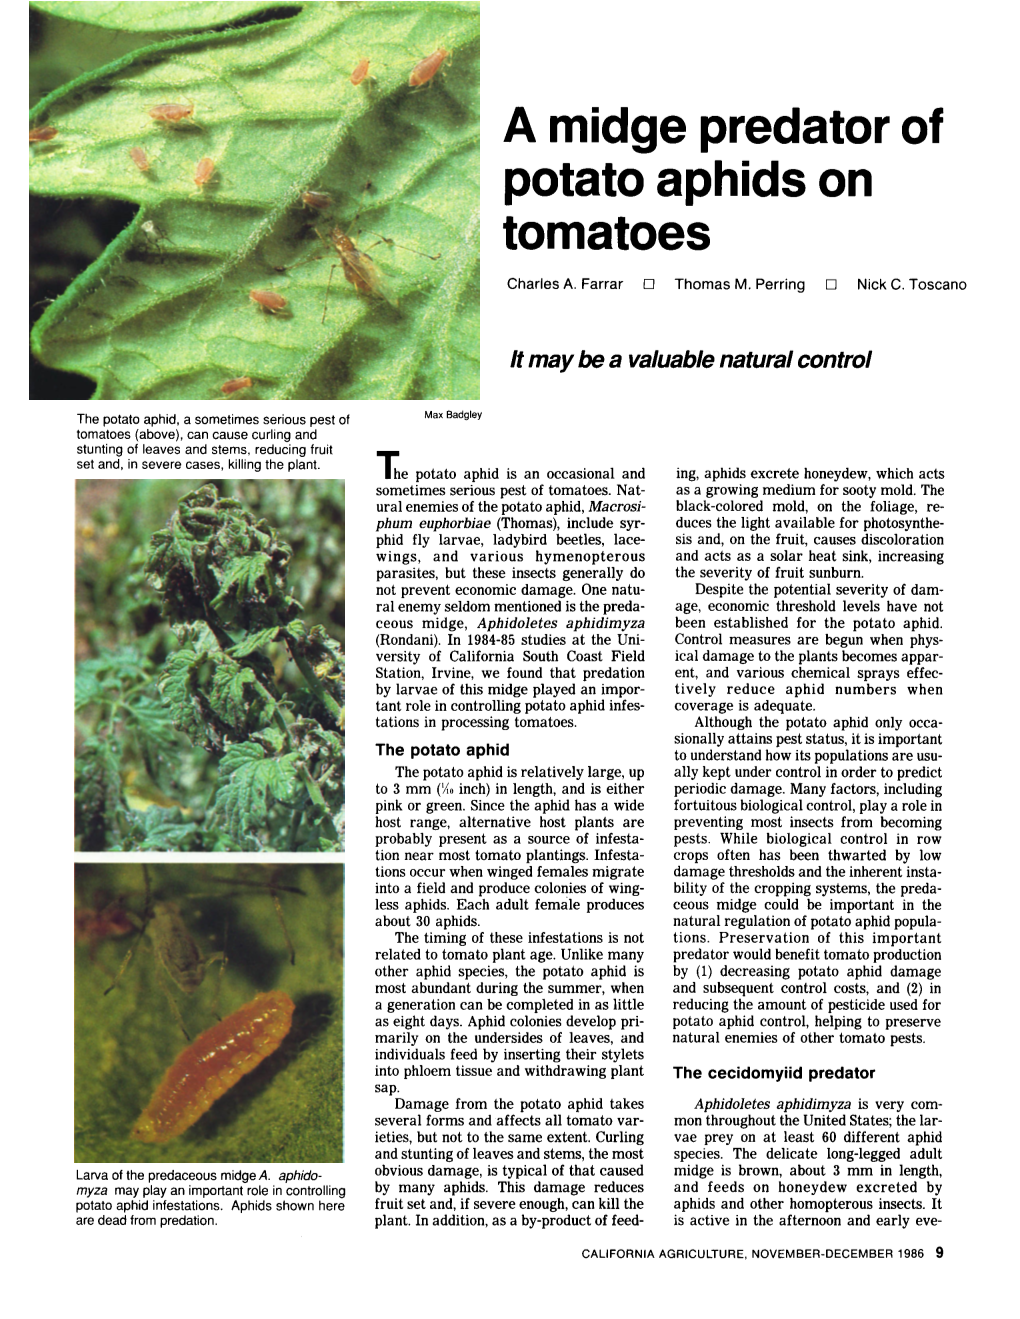 A Midge Predator of Potato Aphids on Tomatoes